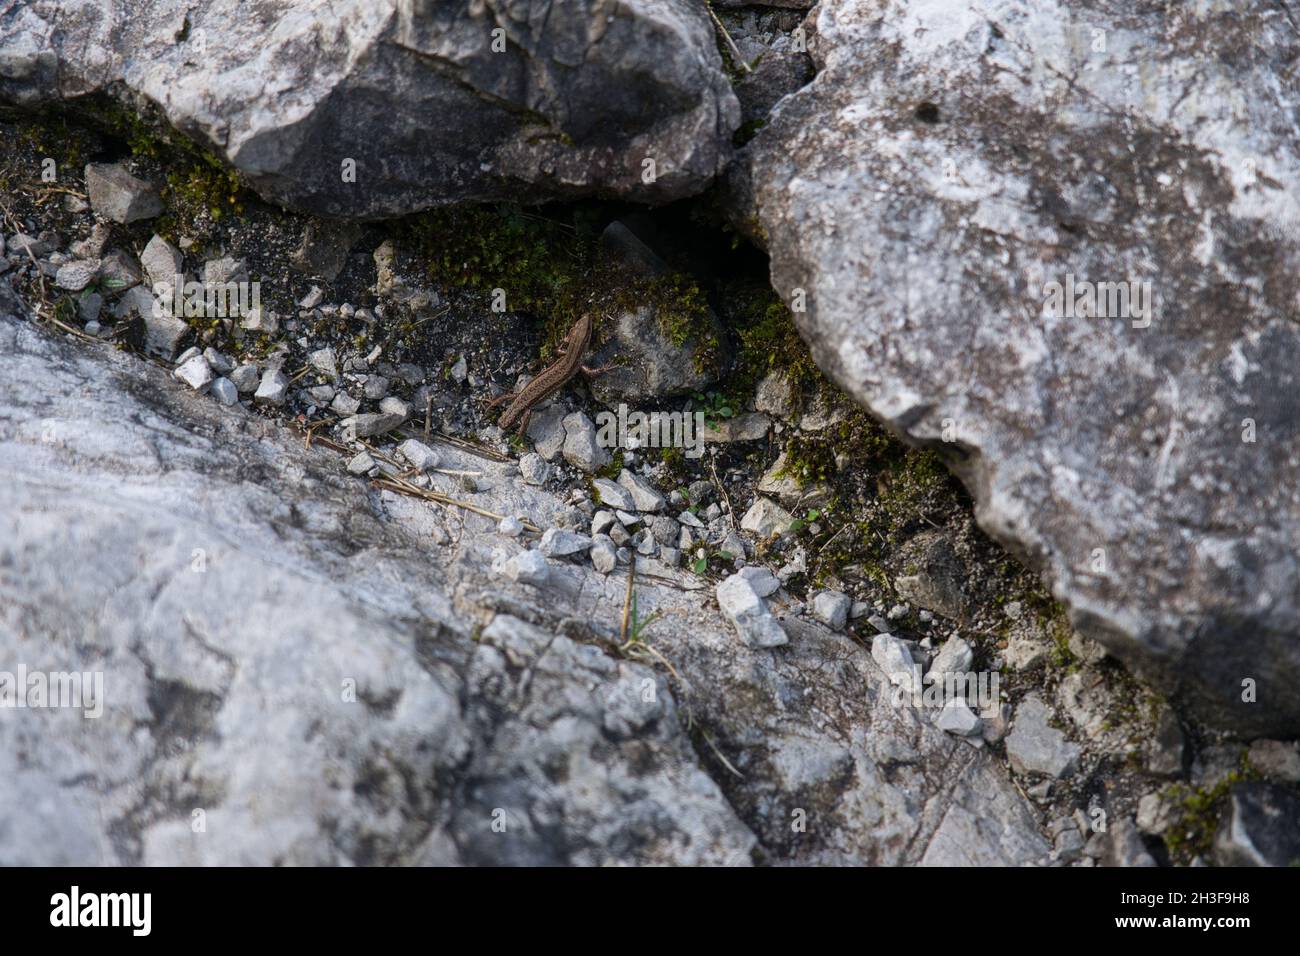 Closeup shot of a lizard among the stones Stock Photo